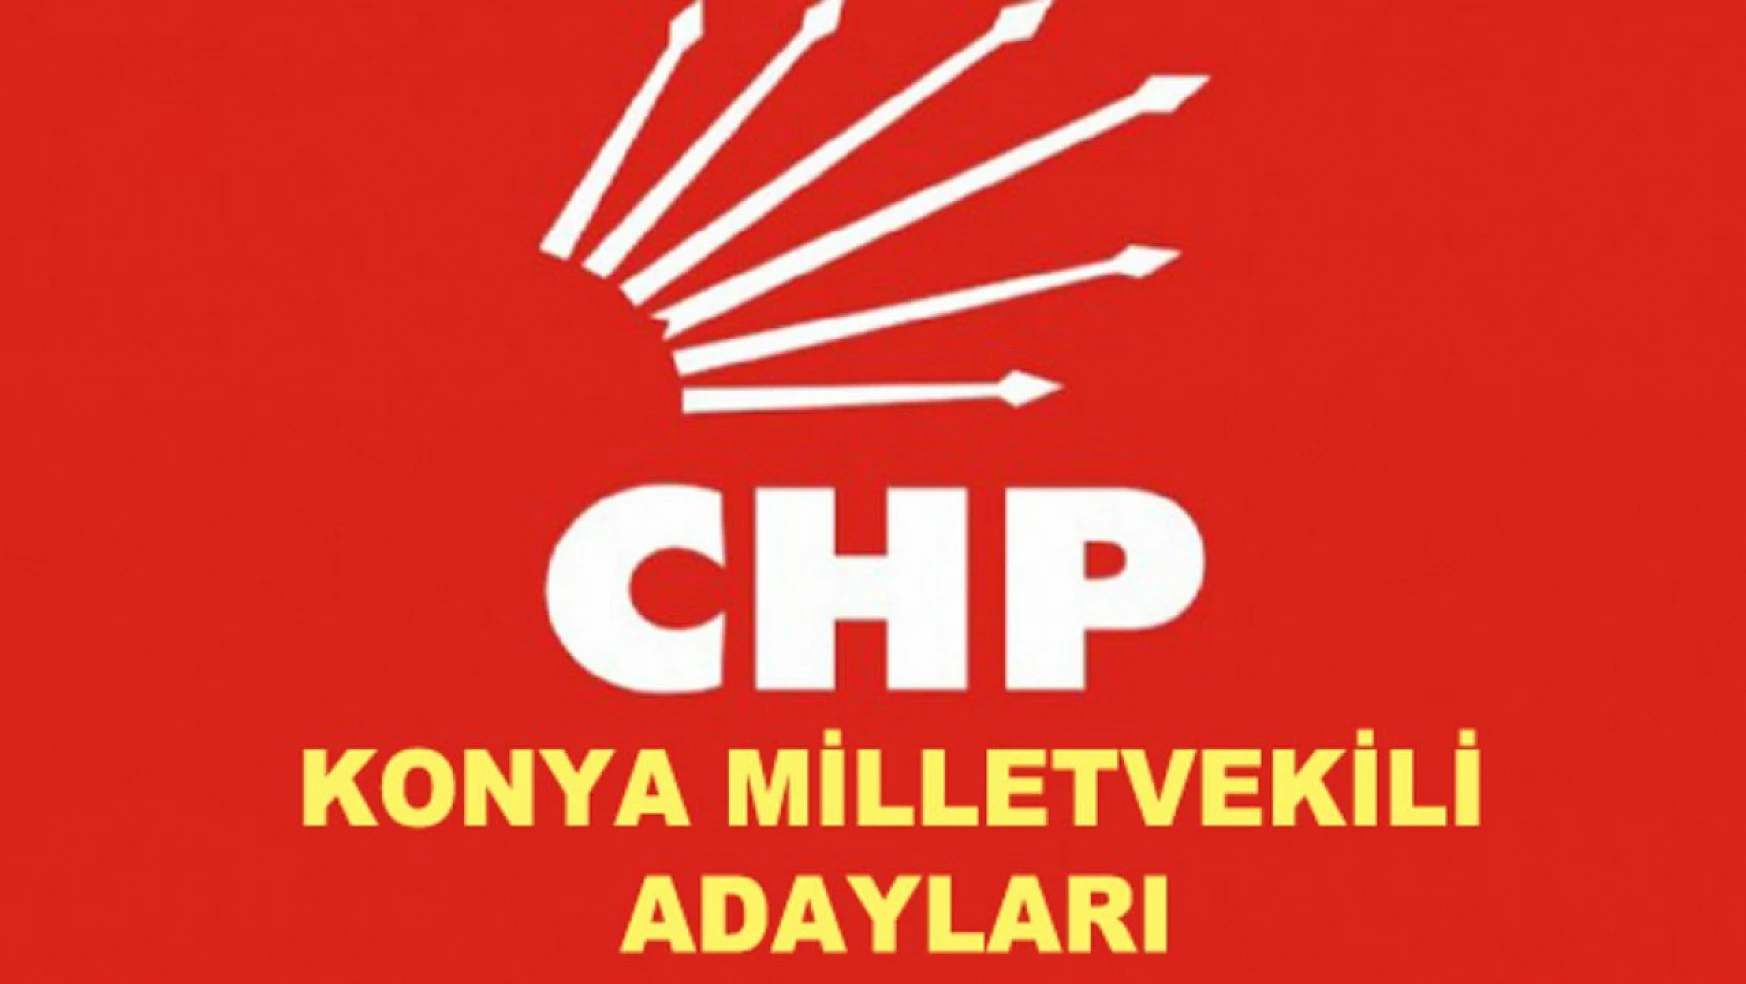 Chp Konya Milletvekili Aday Adayı Listesi Belli Oldu